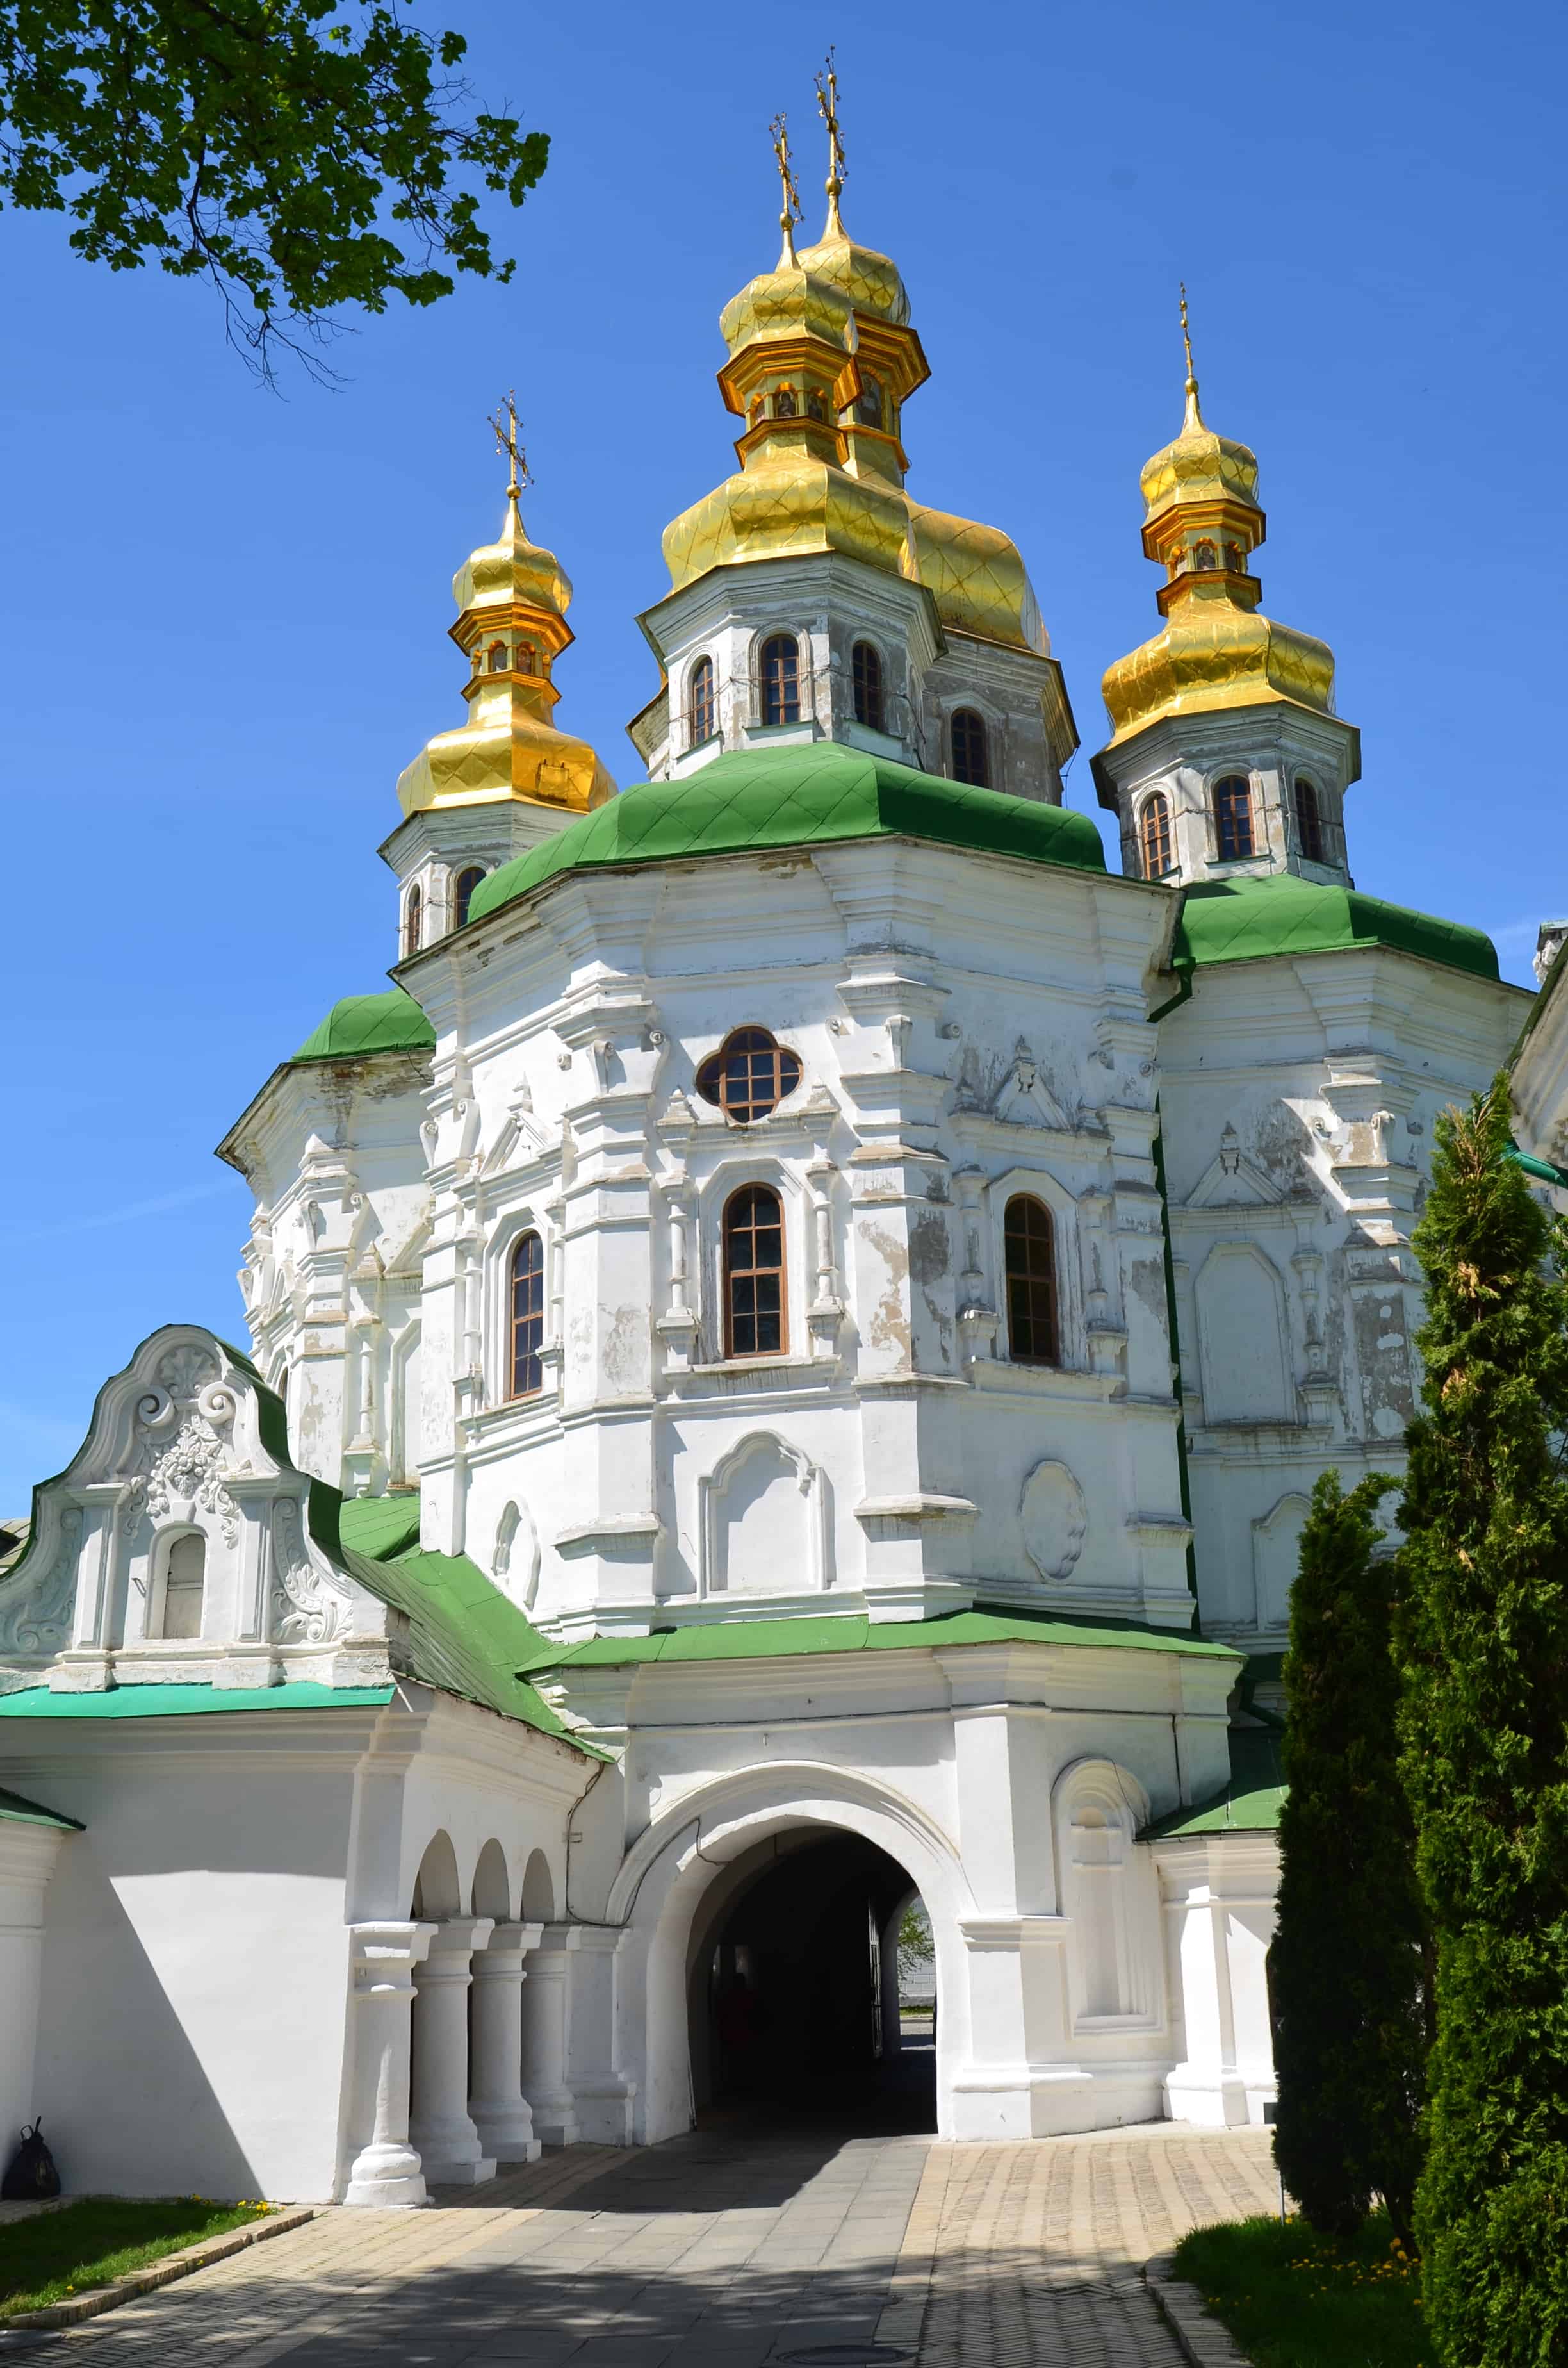 All Saints Church at Kyiv Pechersk Lavra in Kyiv, Ukraine